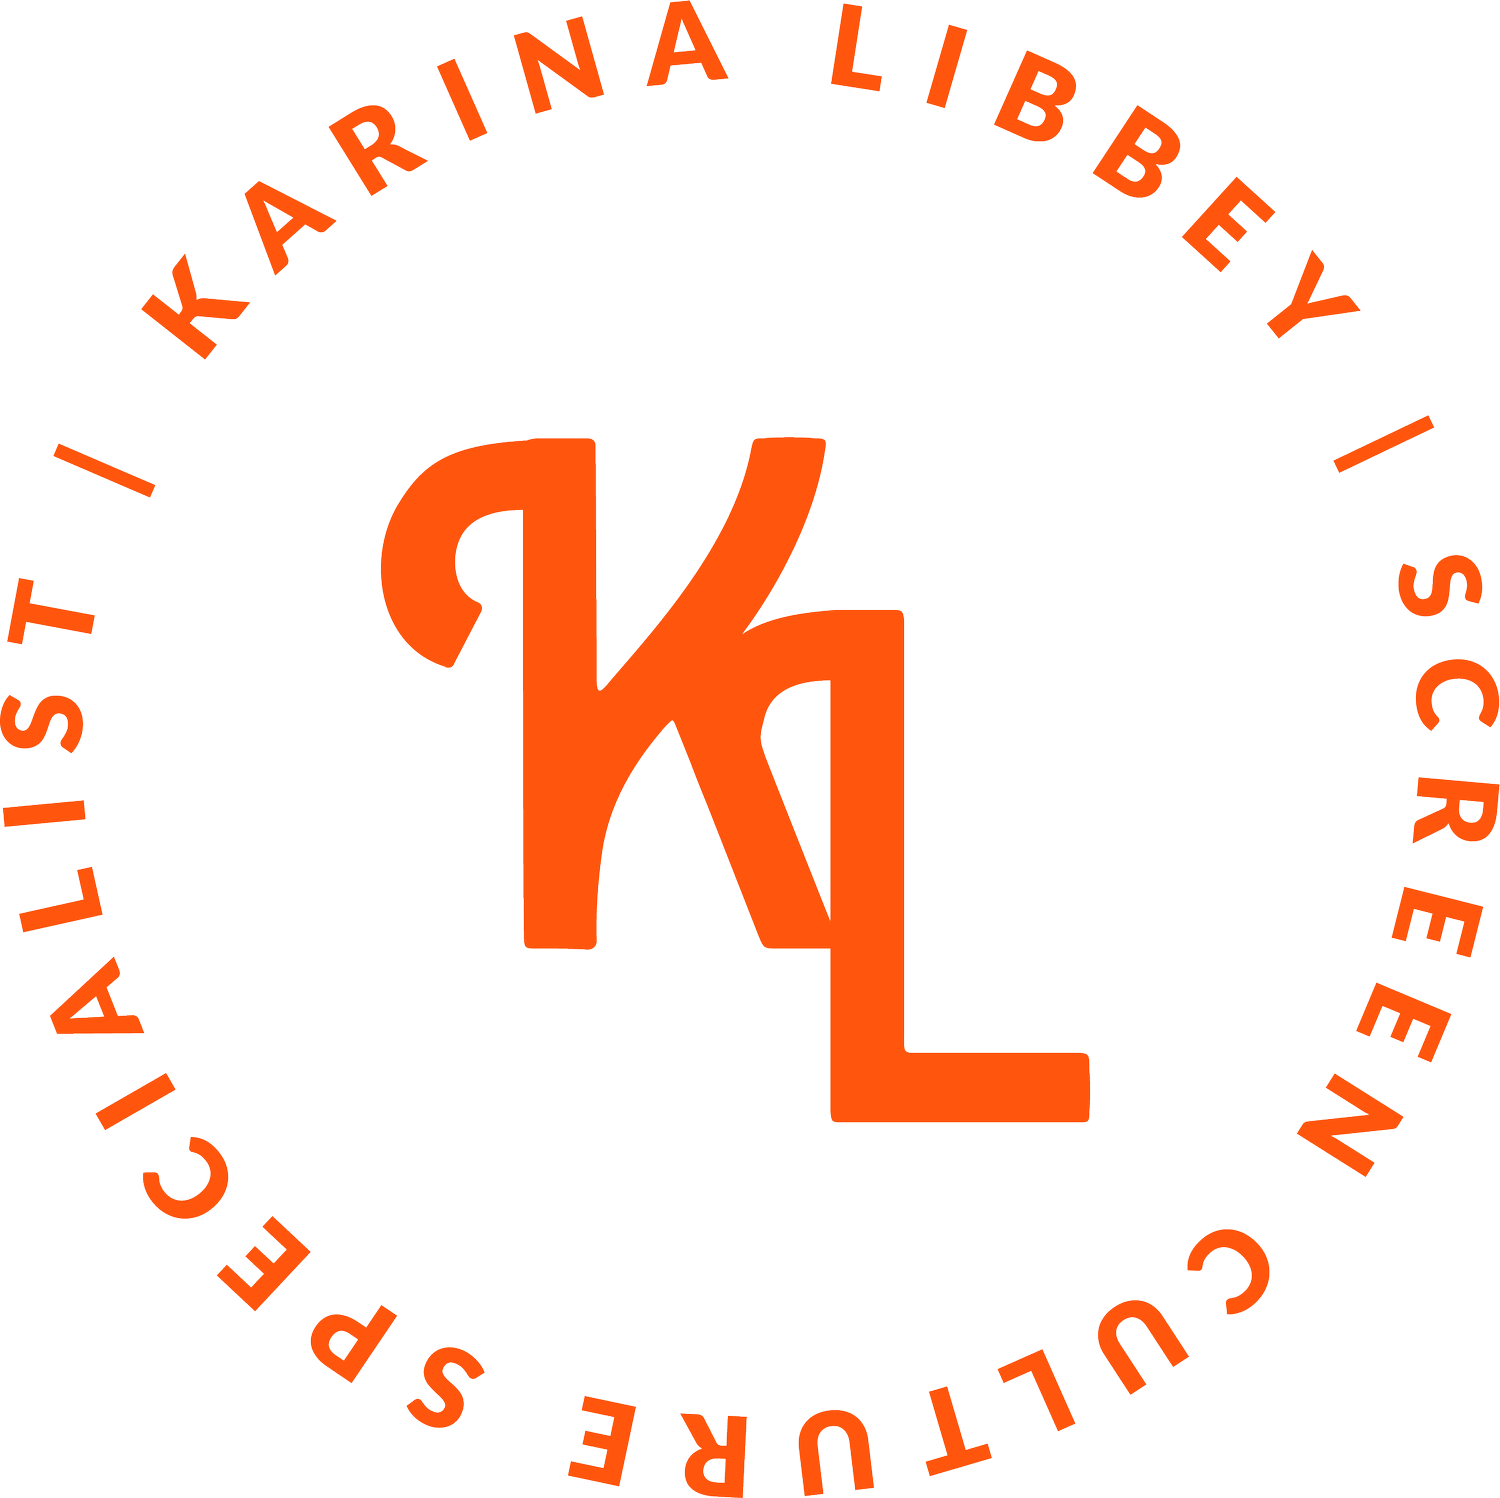 Karina Libbey, screen culture specialist